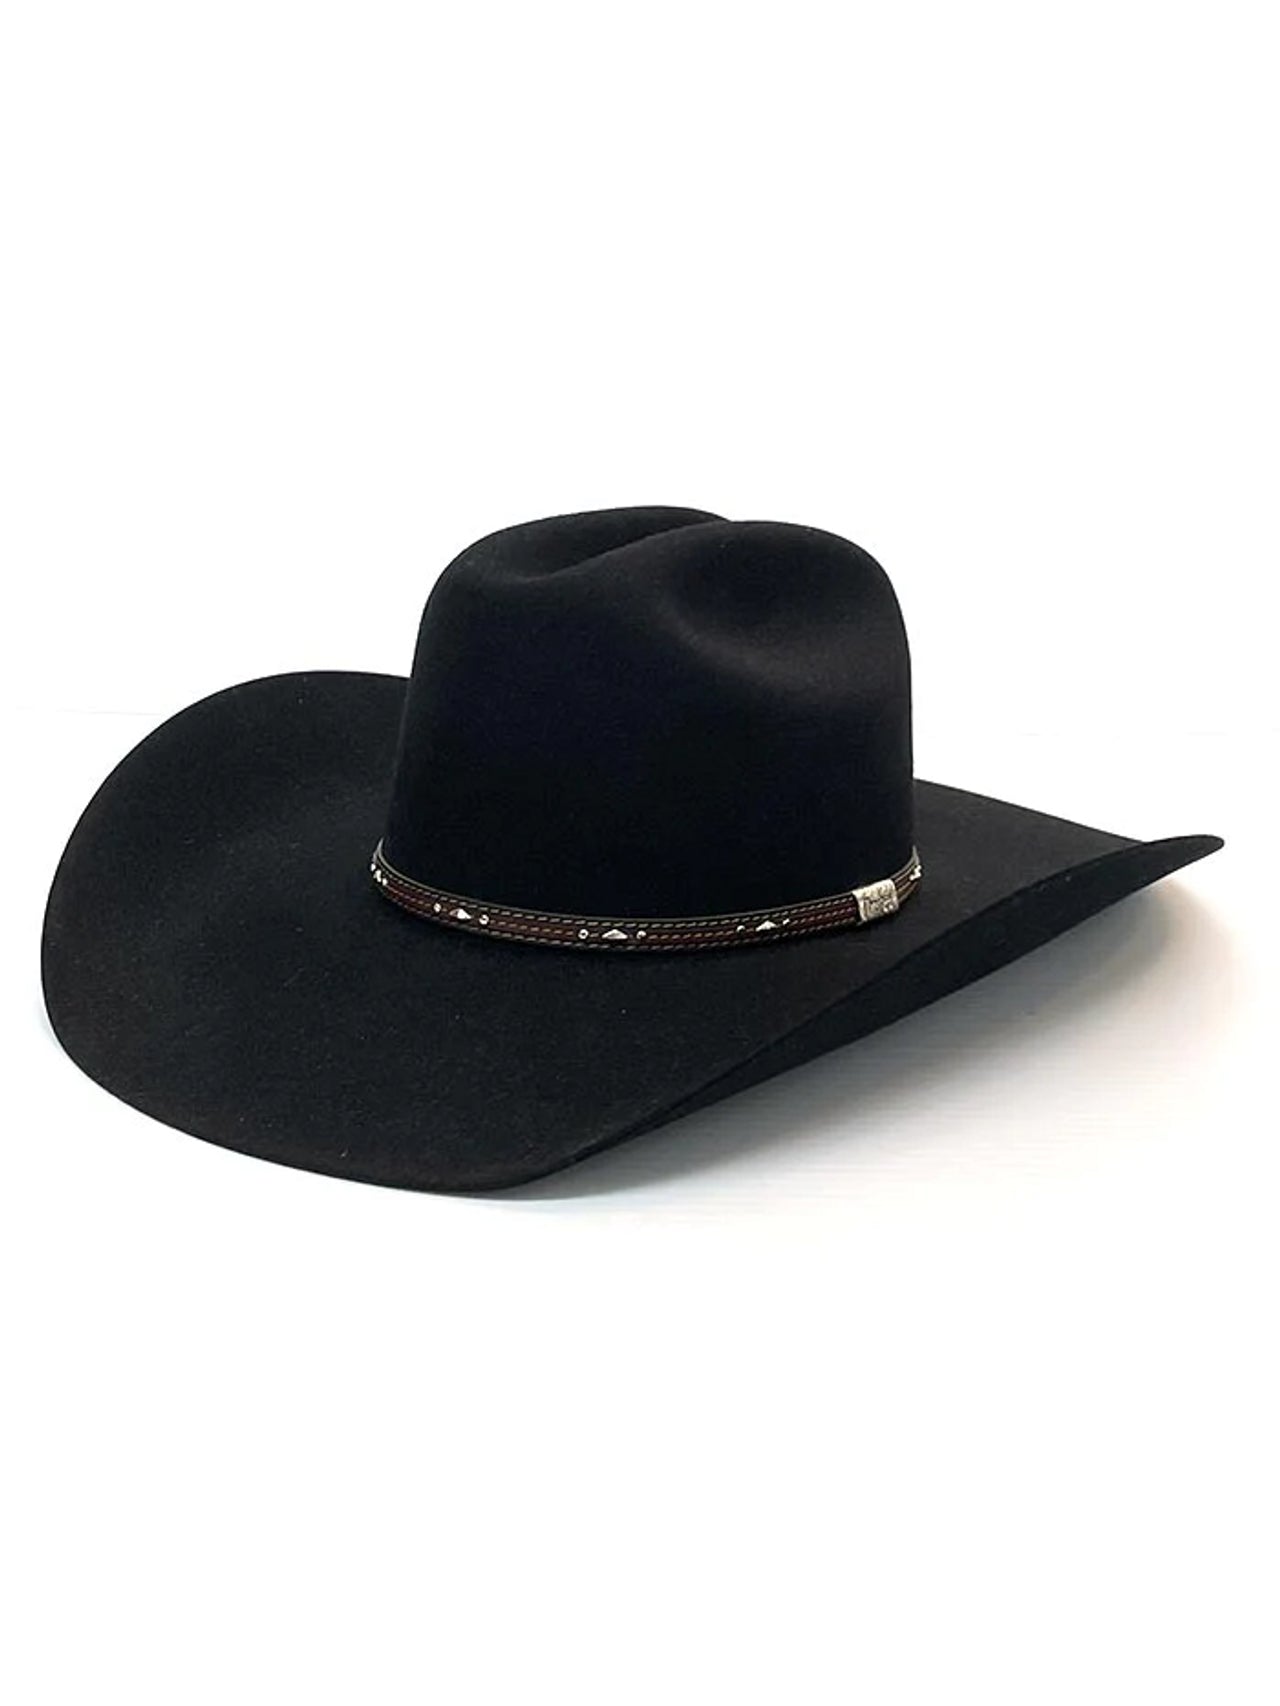 Resistol 6x Kingman George Strait Edition Cowboy Hat Fur Felt Hat Black